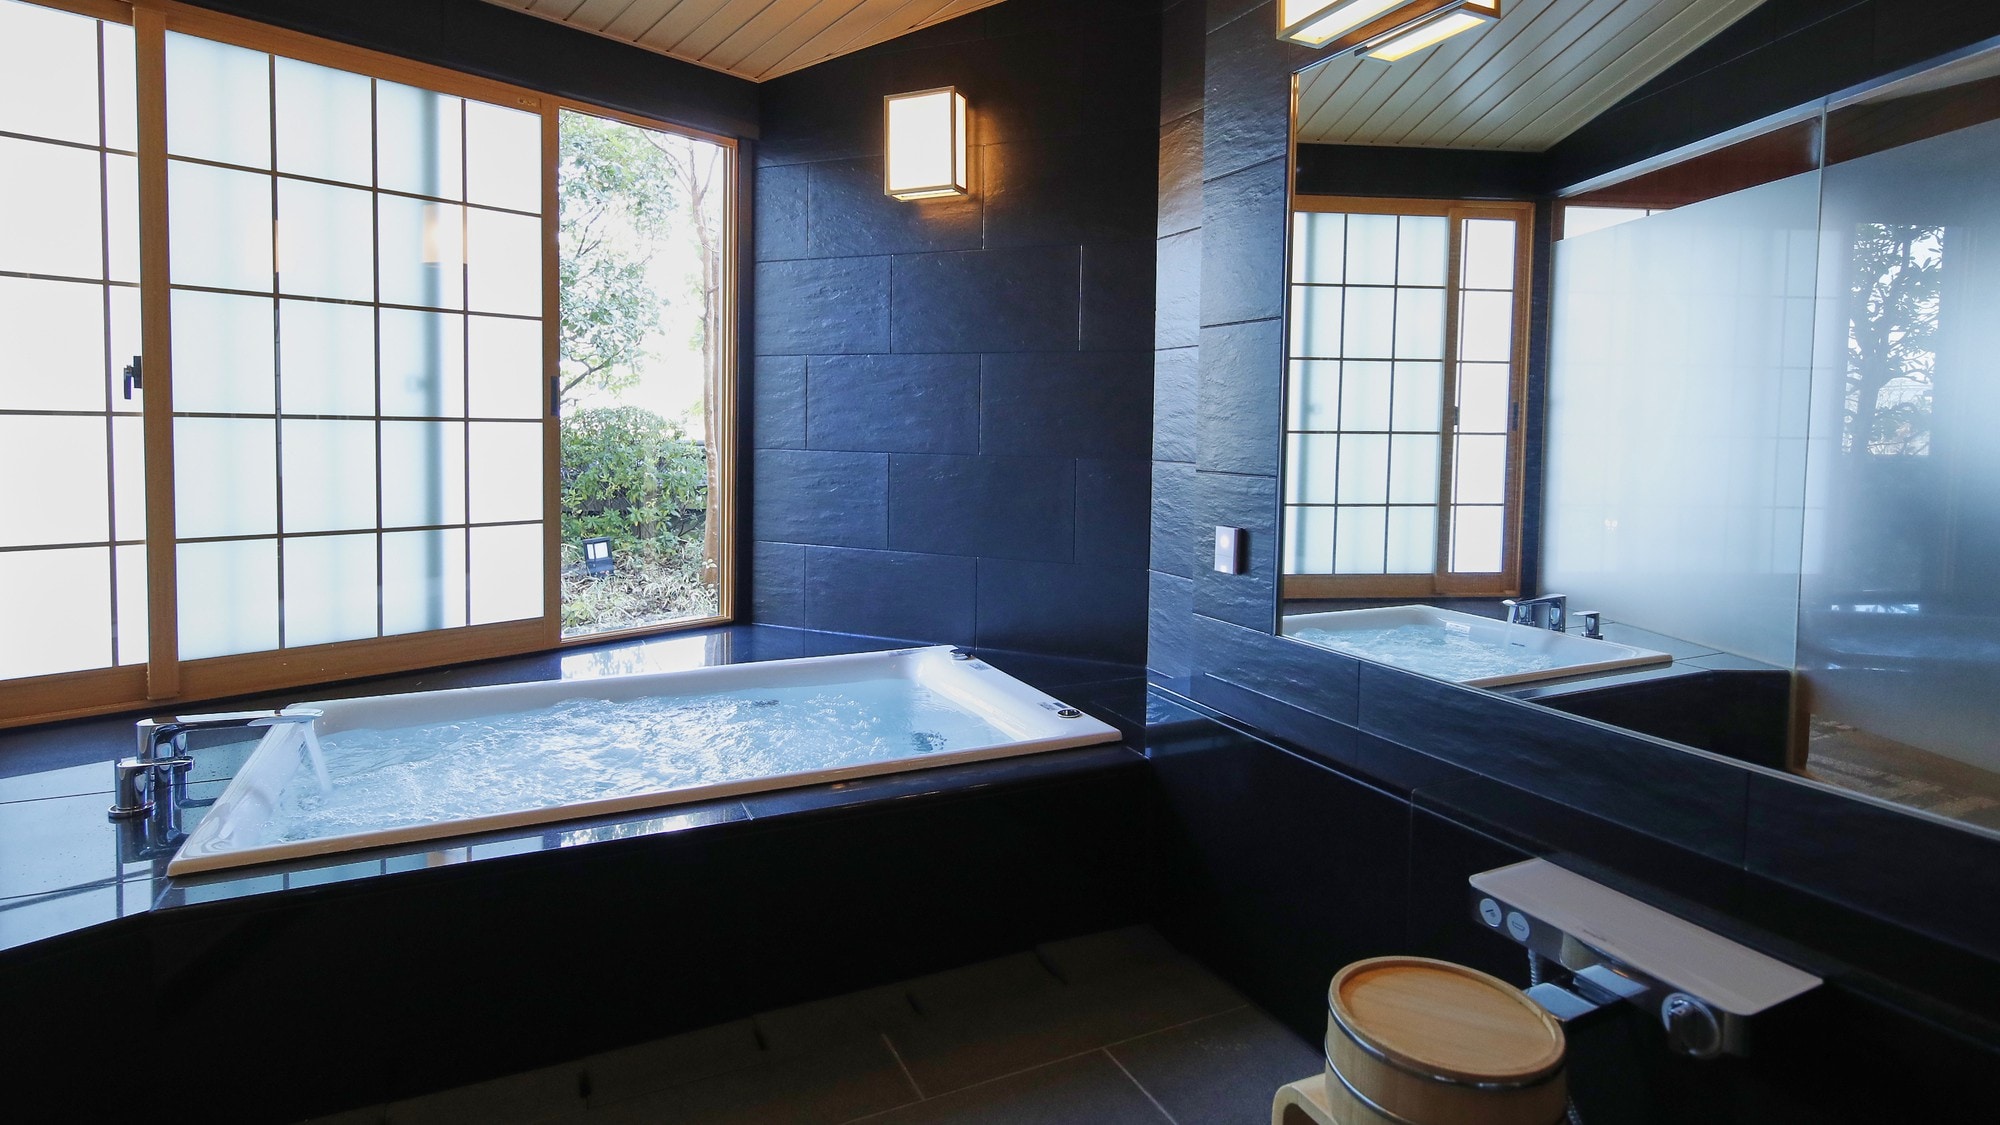 An example of a Japanese-style bathroom